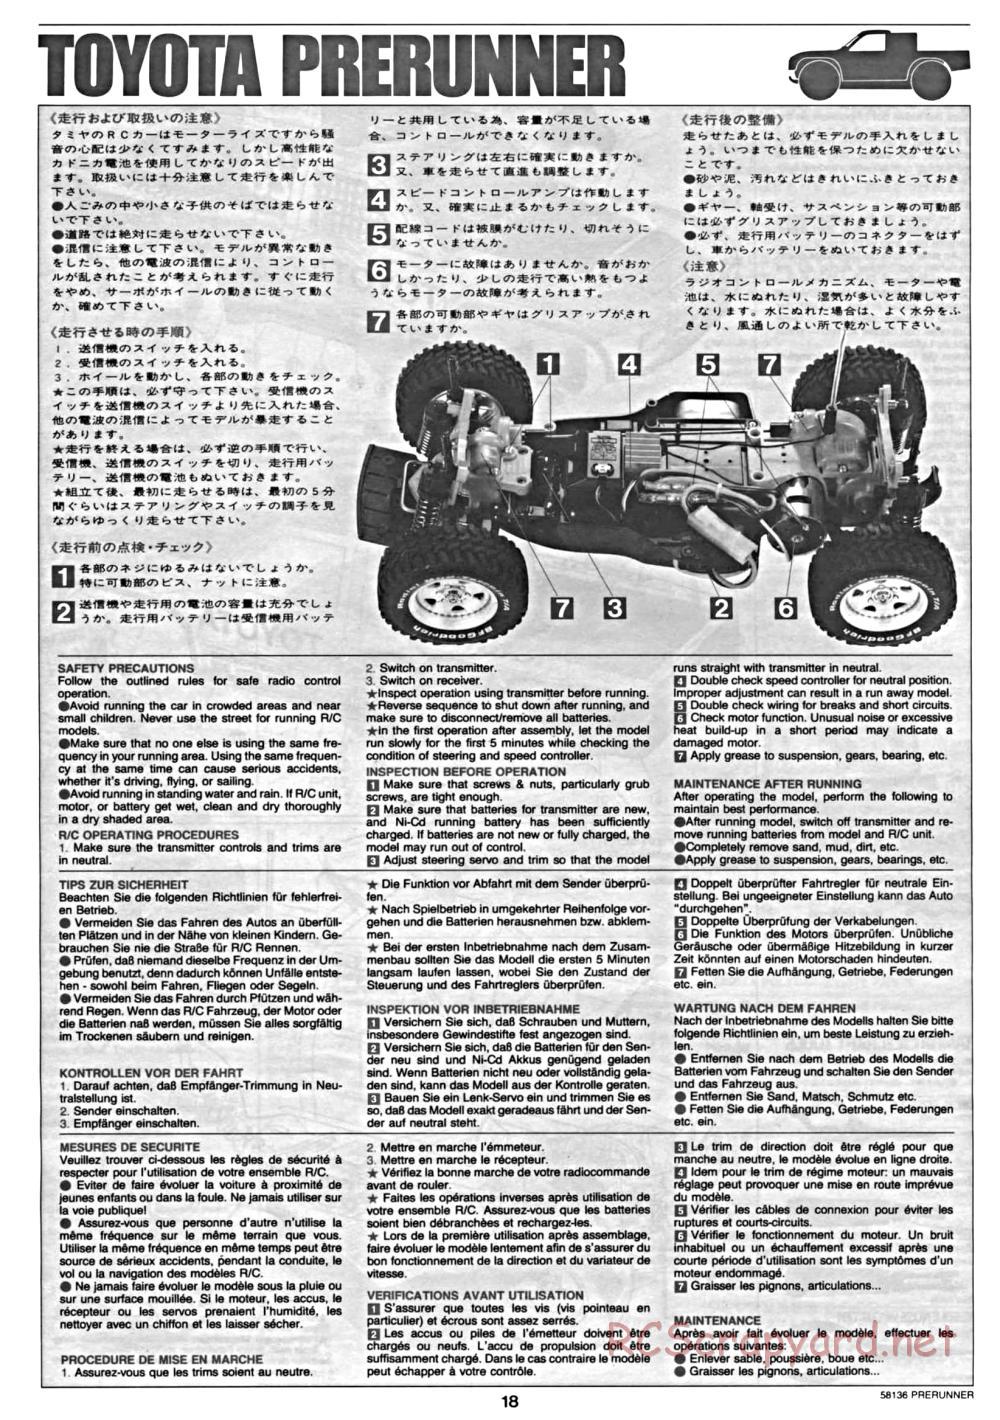 Tamiya - Toyota Prerunner Chassis - Manual - Page 18